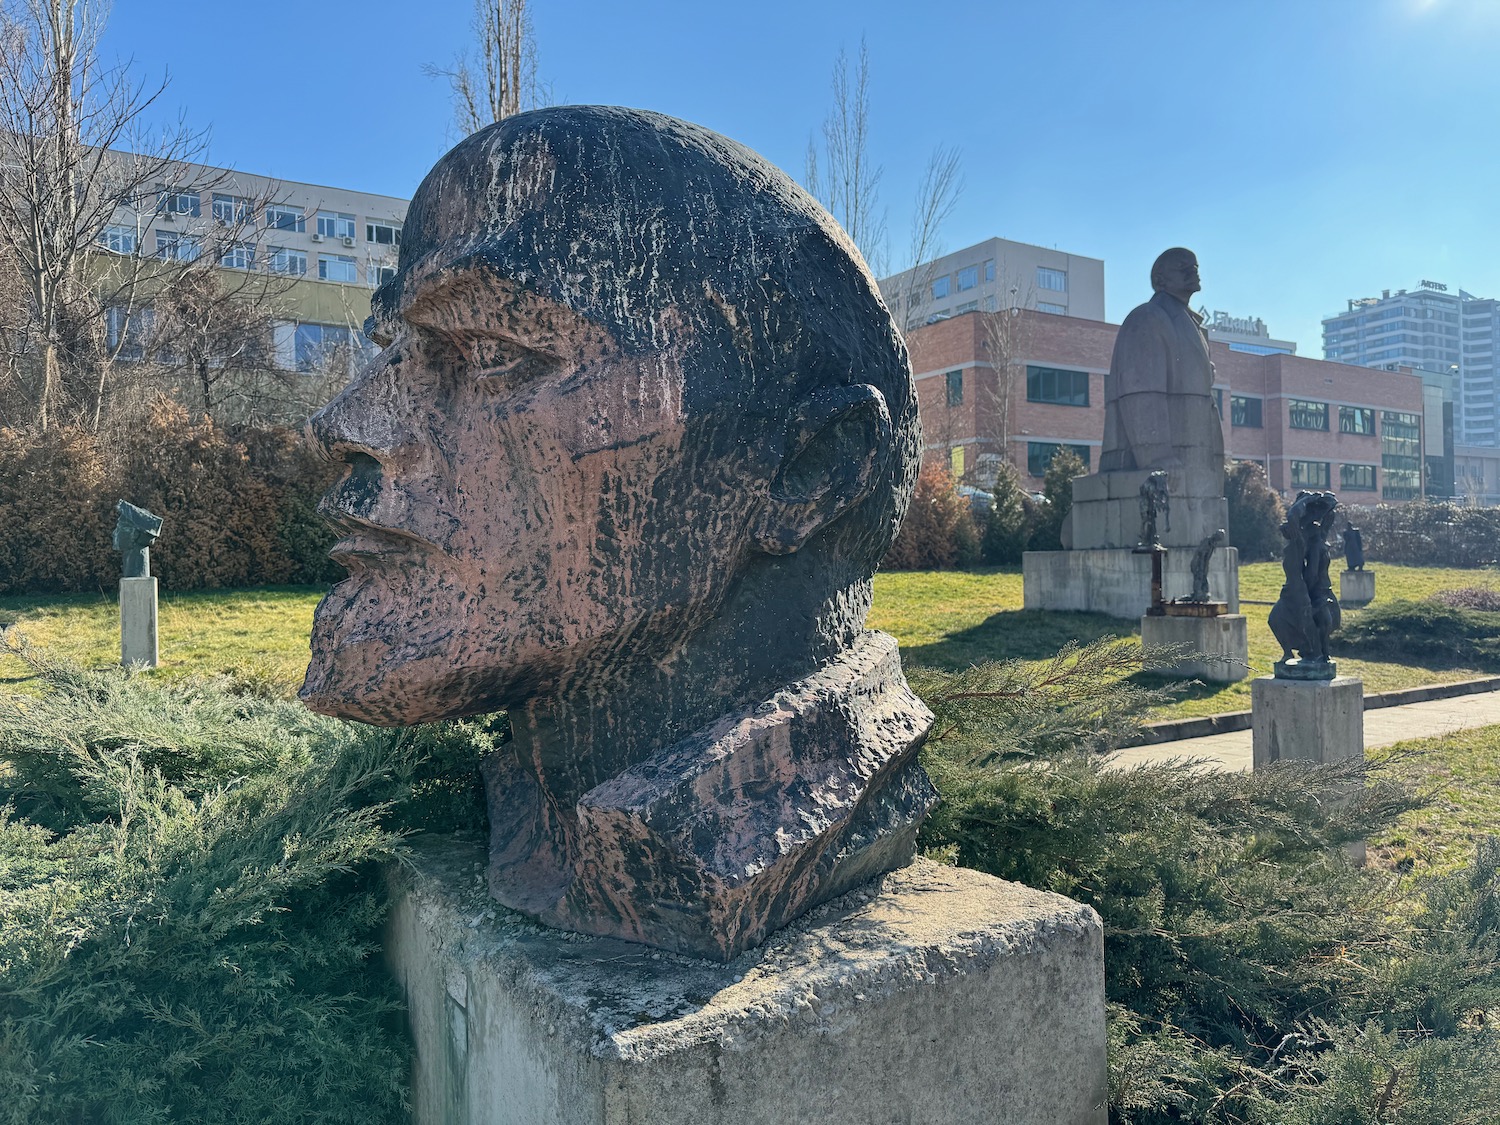 a statue of a man's head